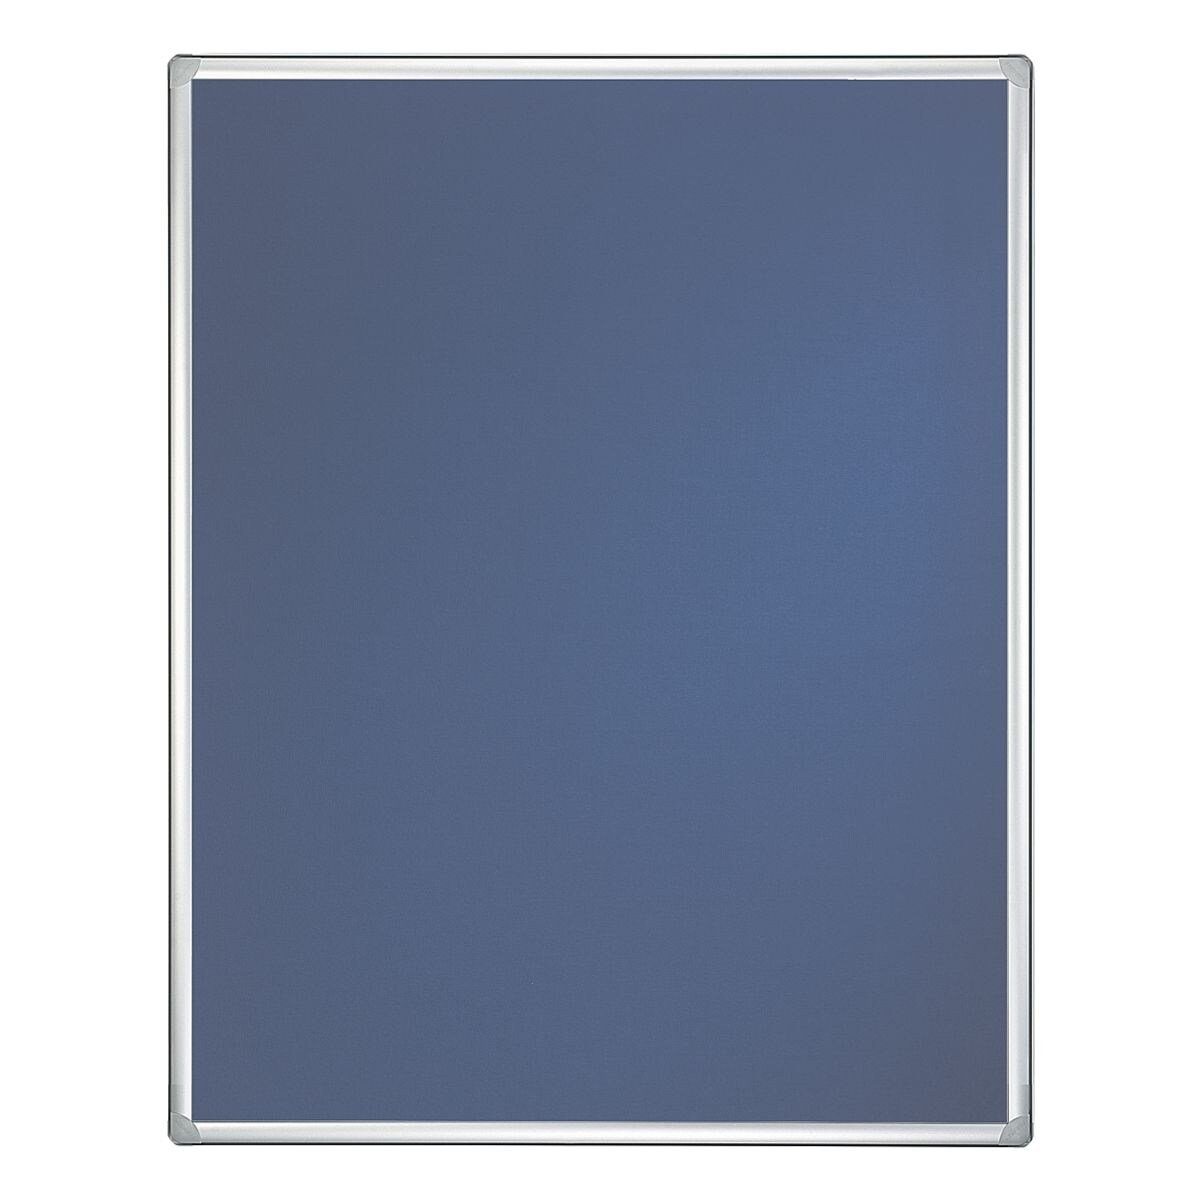 Pro blau lackiert SFD8014, beidseitig Filz/ Pinnwand silber nutzbar, FRANKEN